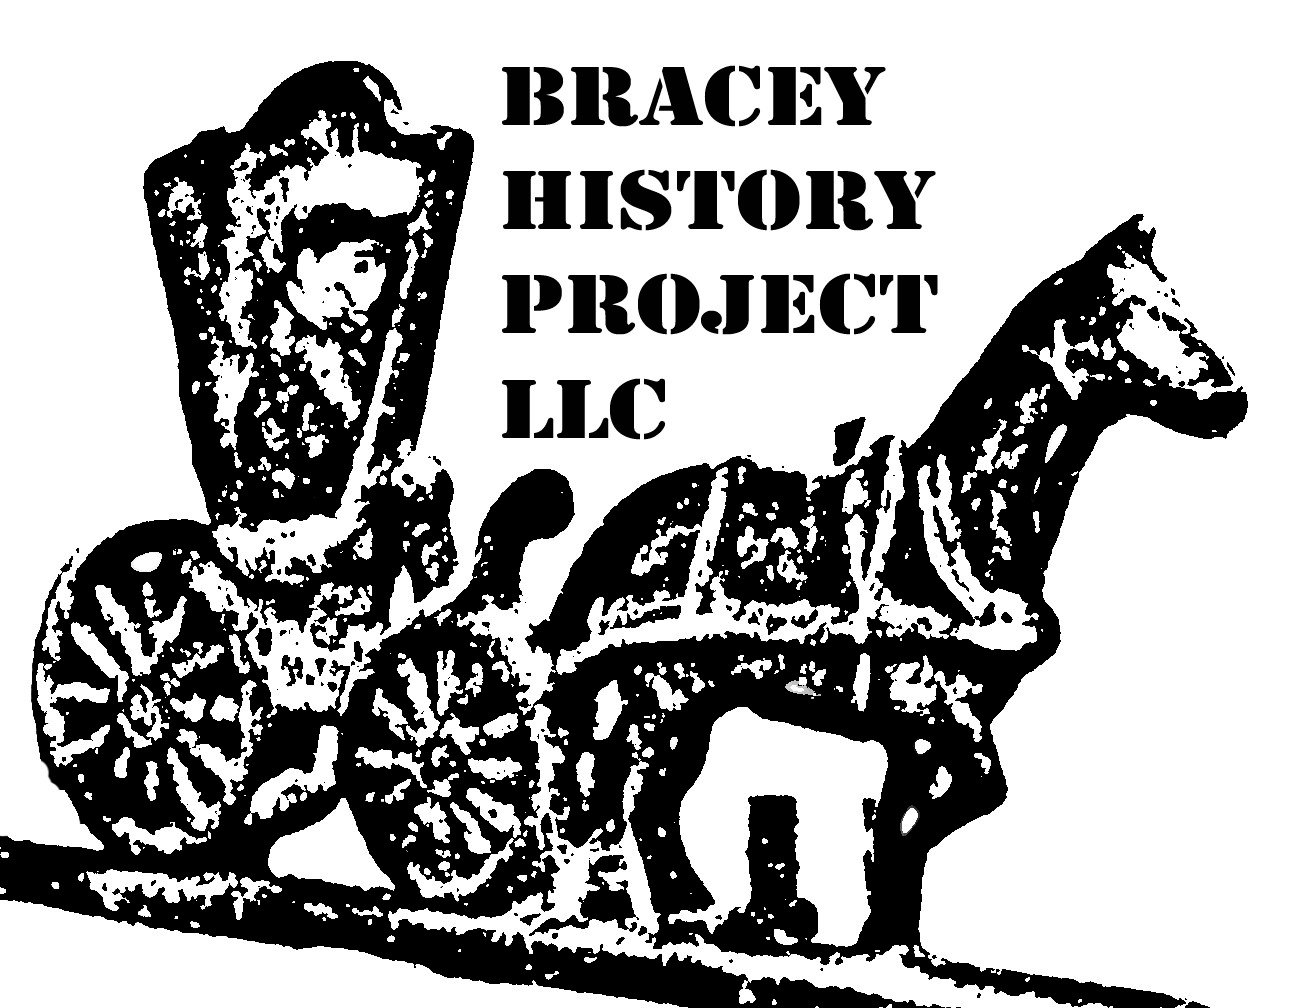 Bracey History Project